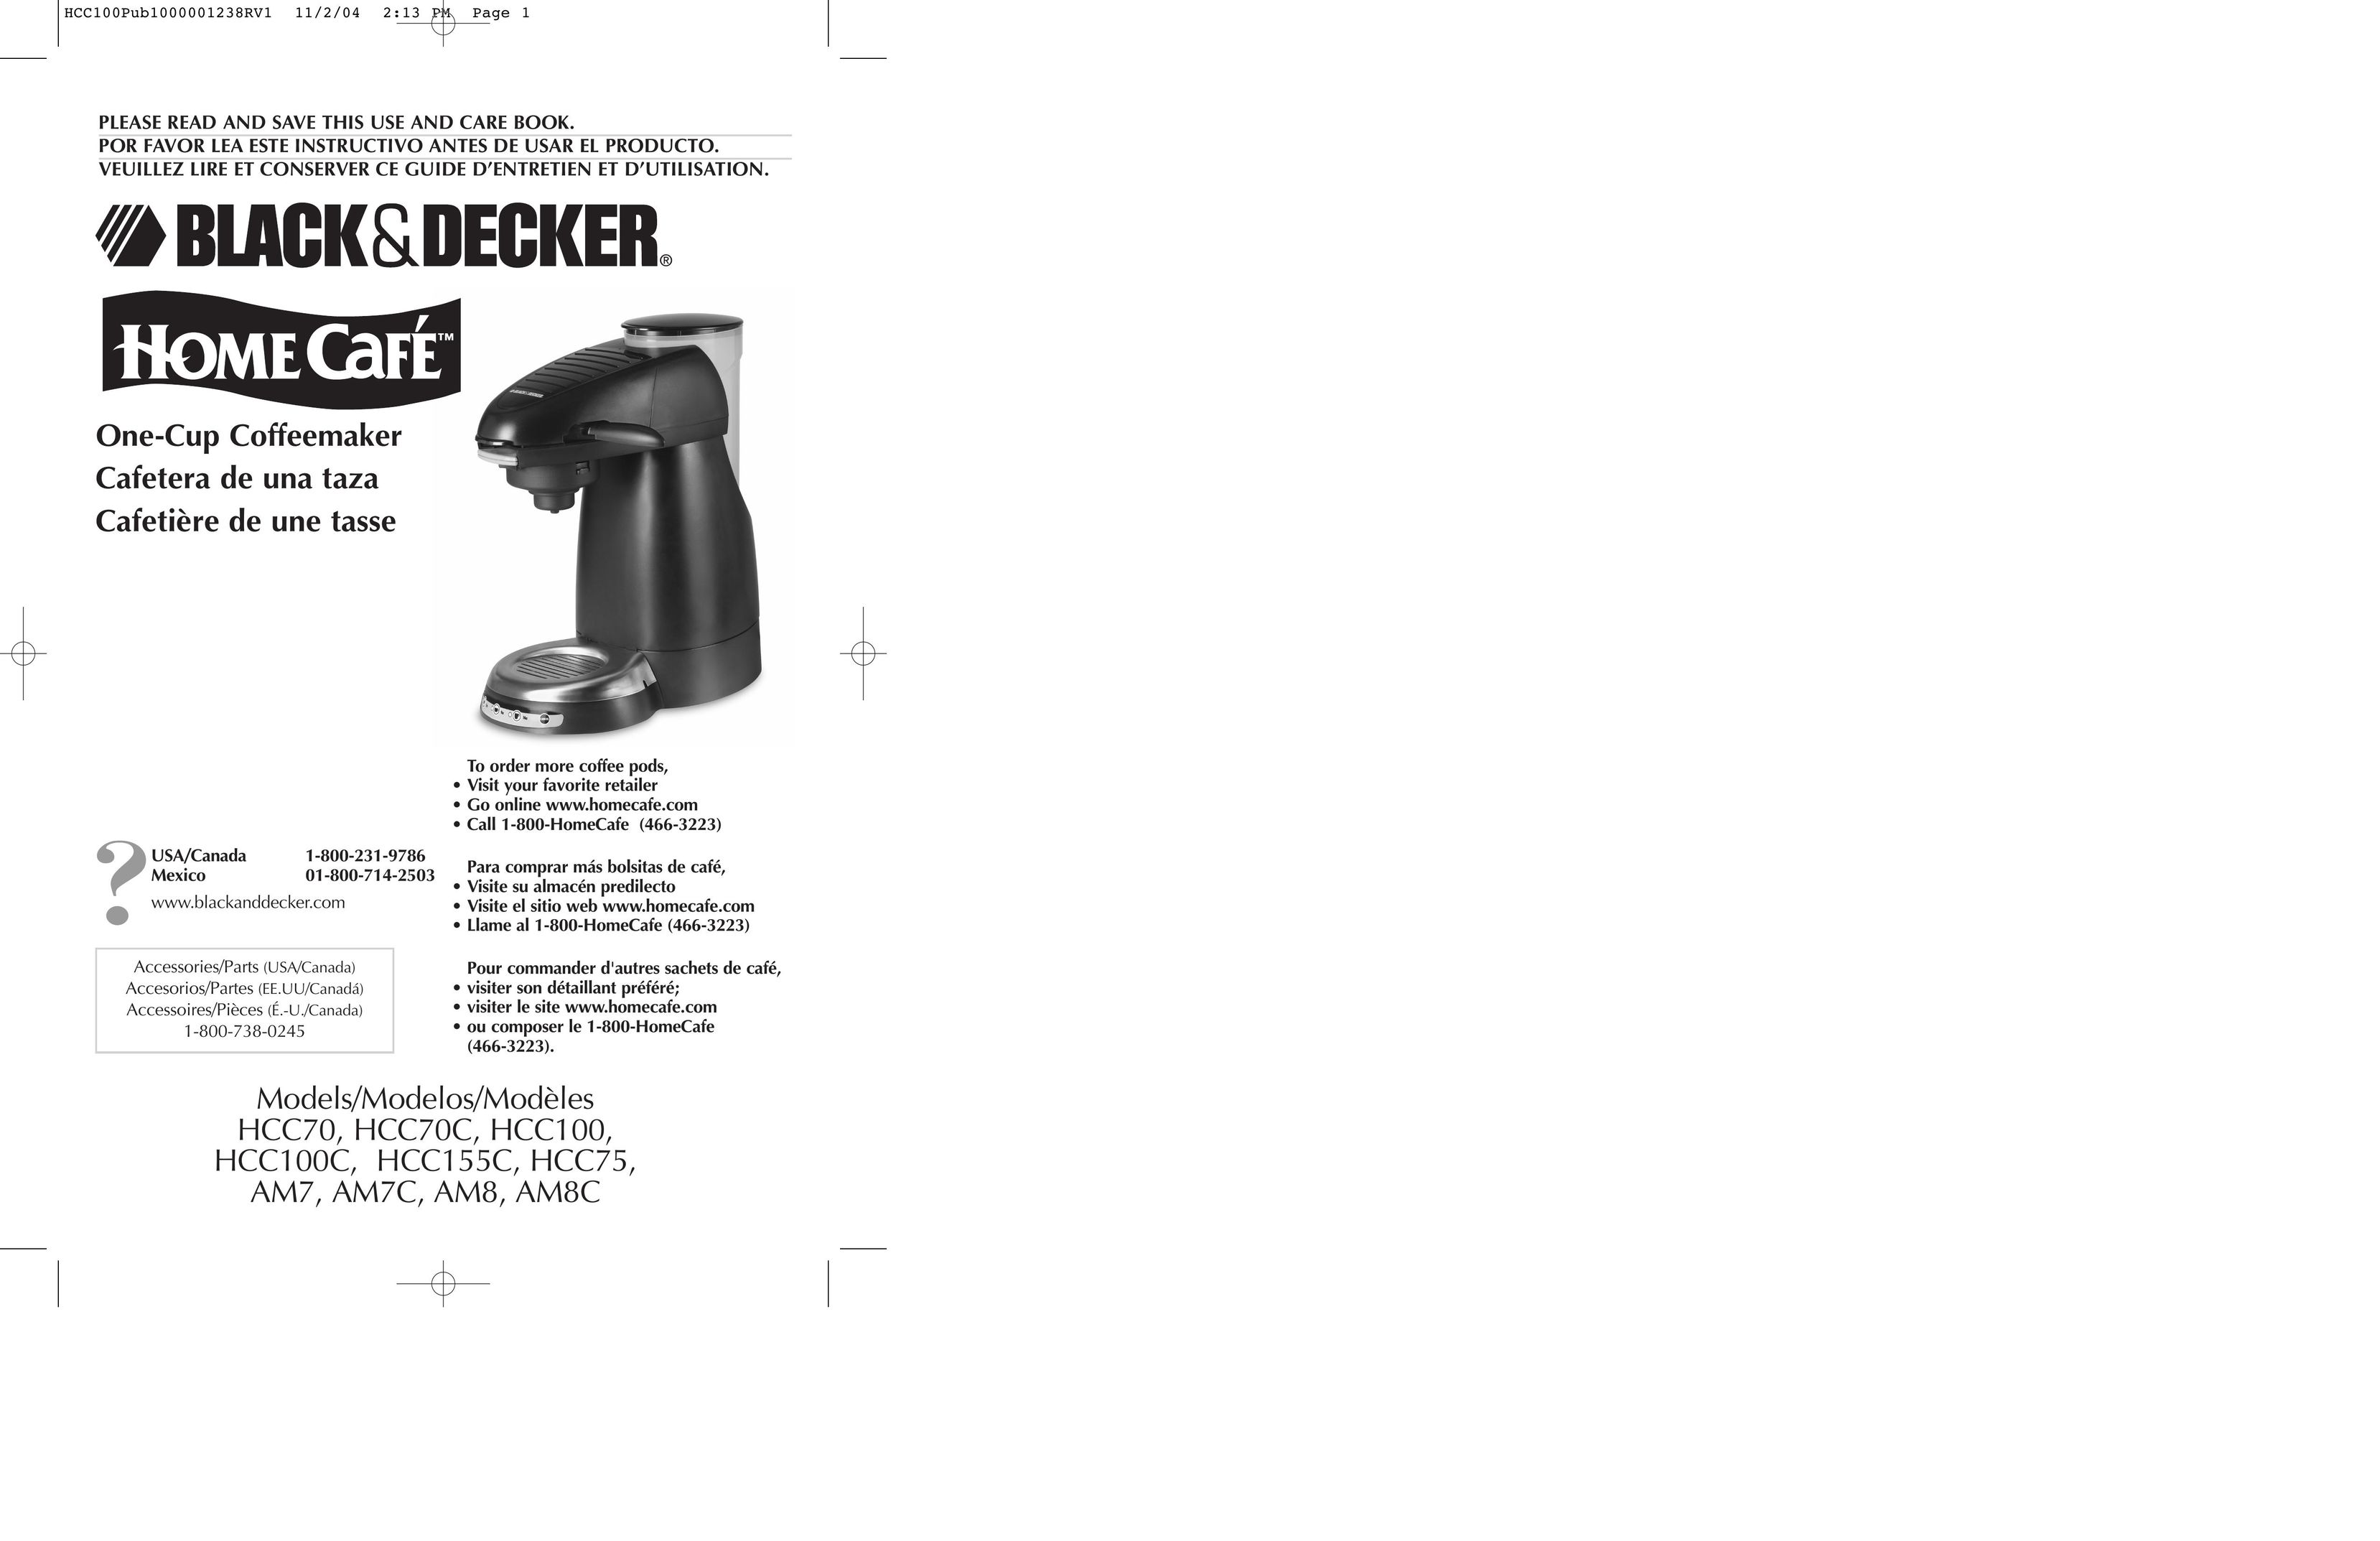 Black & Decker AM7 Coffeemaker User Manual